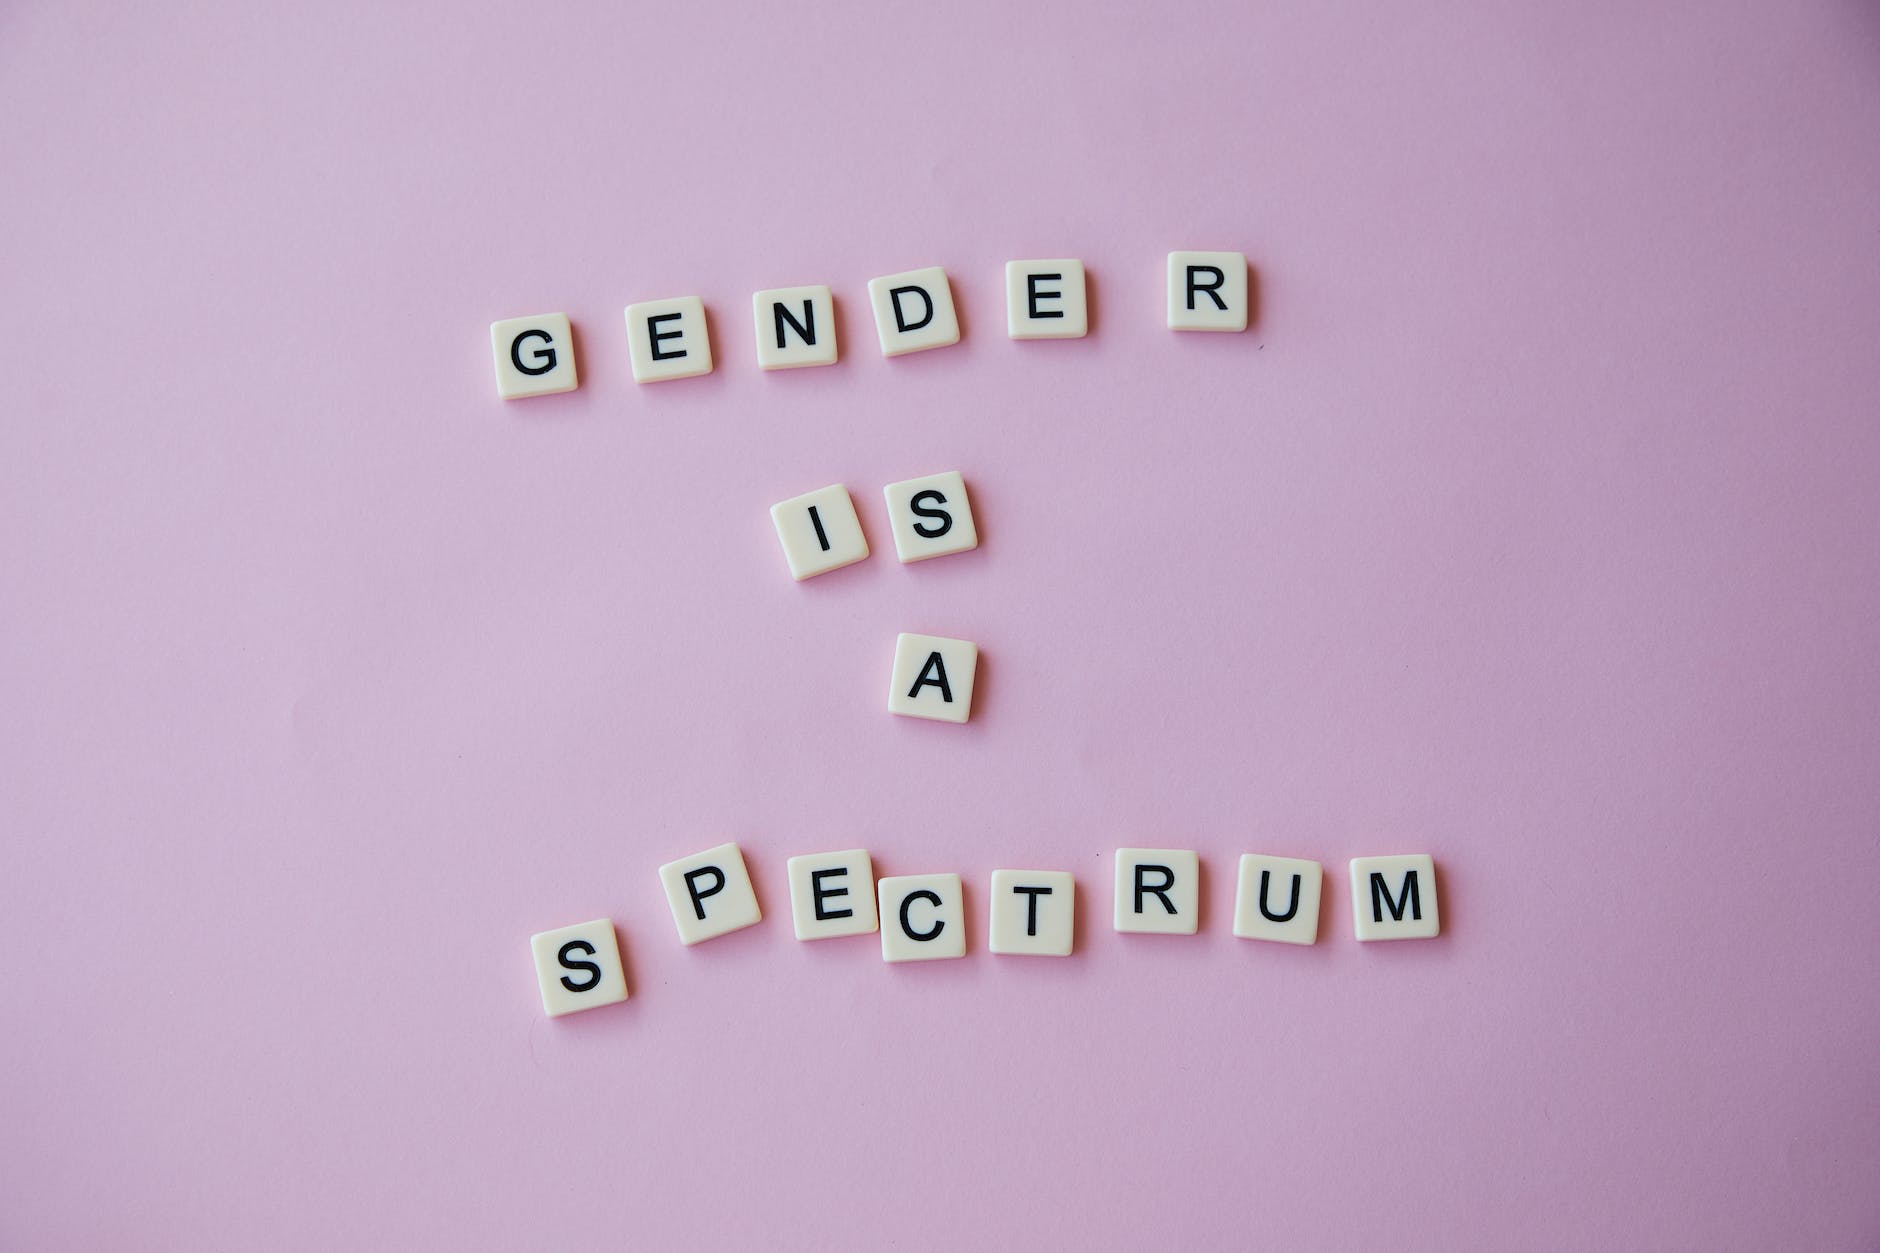 Trigender is on the gender spectrum